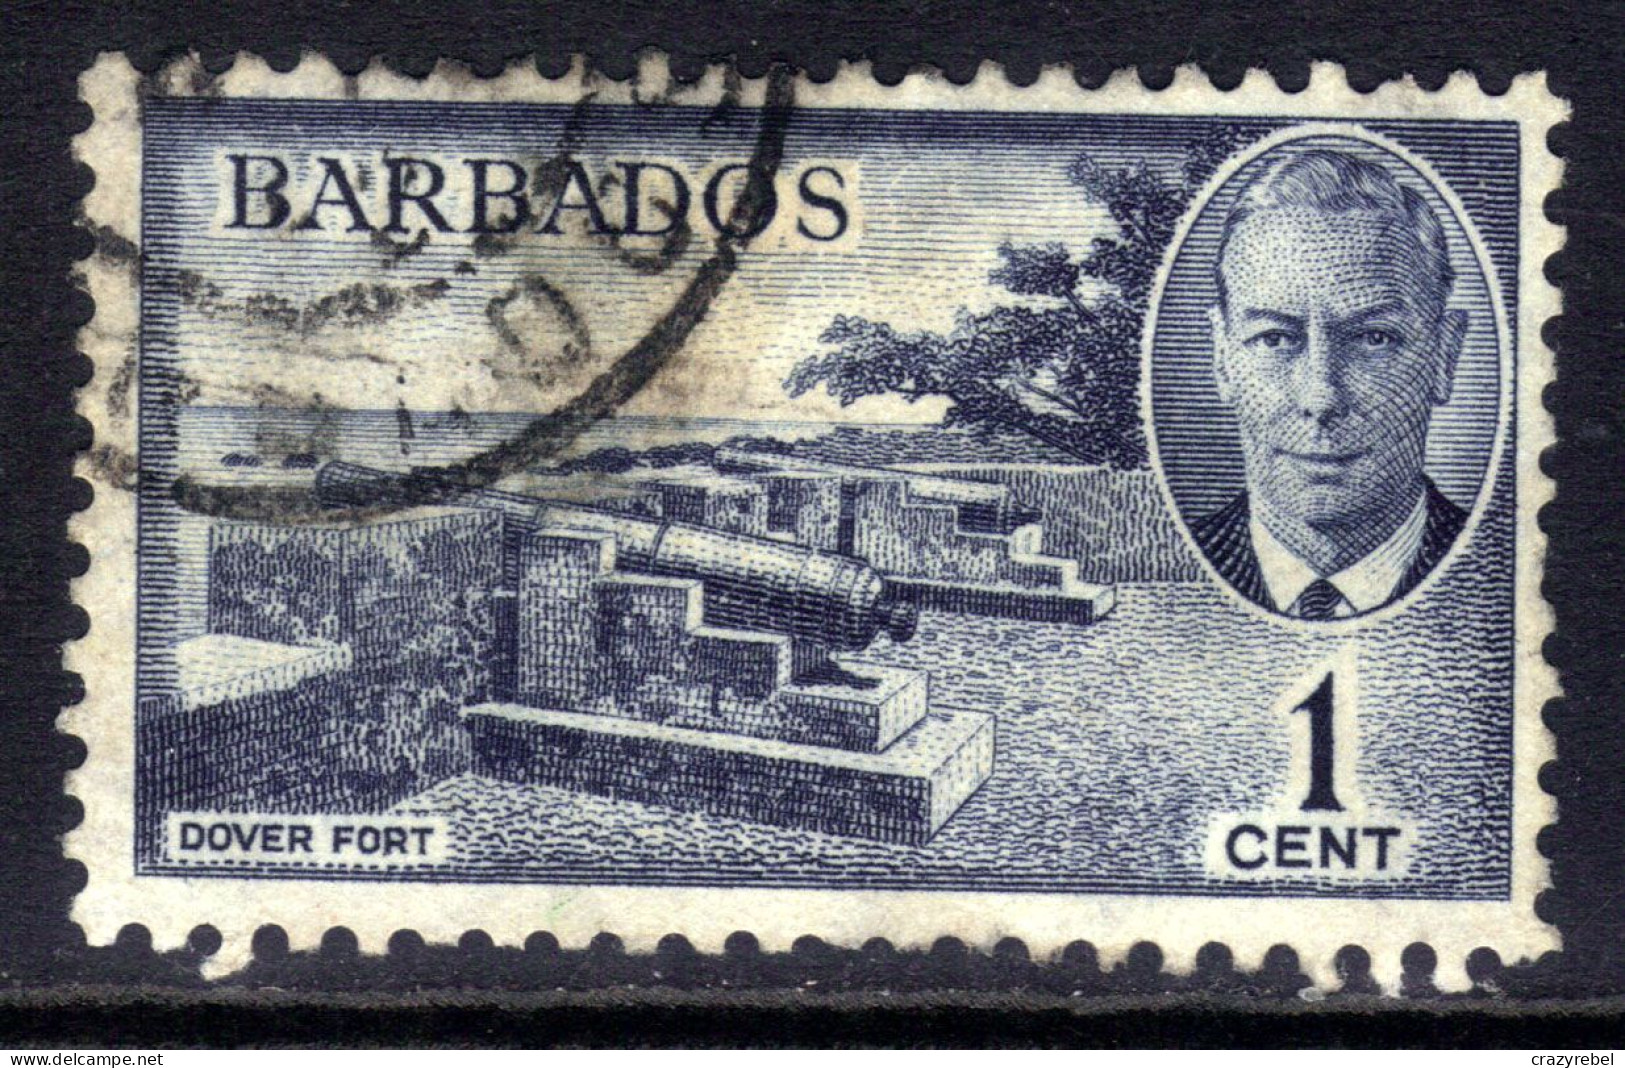 Barbados 1950 KGV1 1ct Dover Fort Used SG 271 ( K801 ) - Barbados (...-1966)